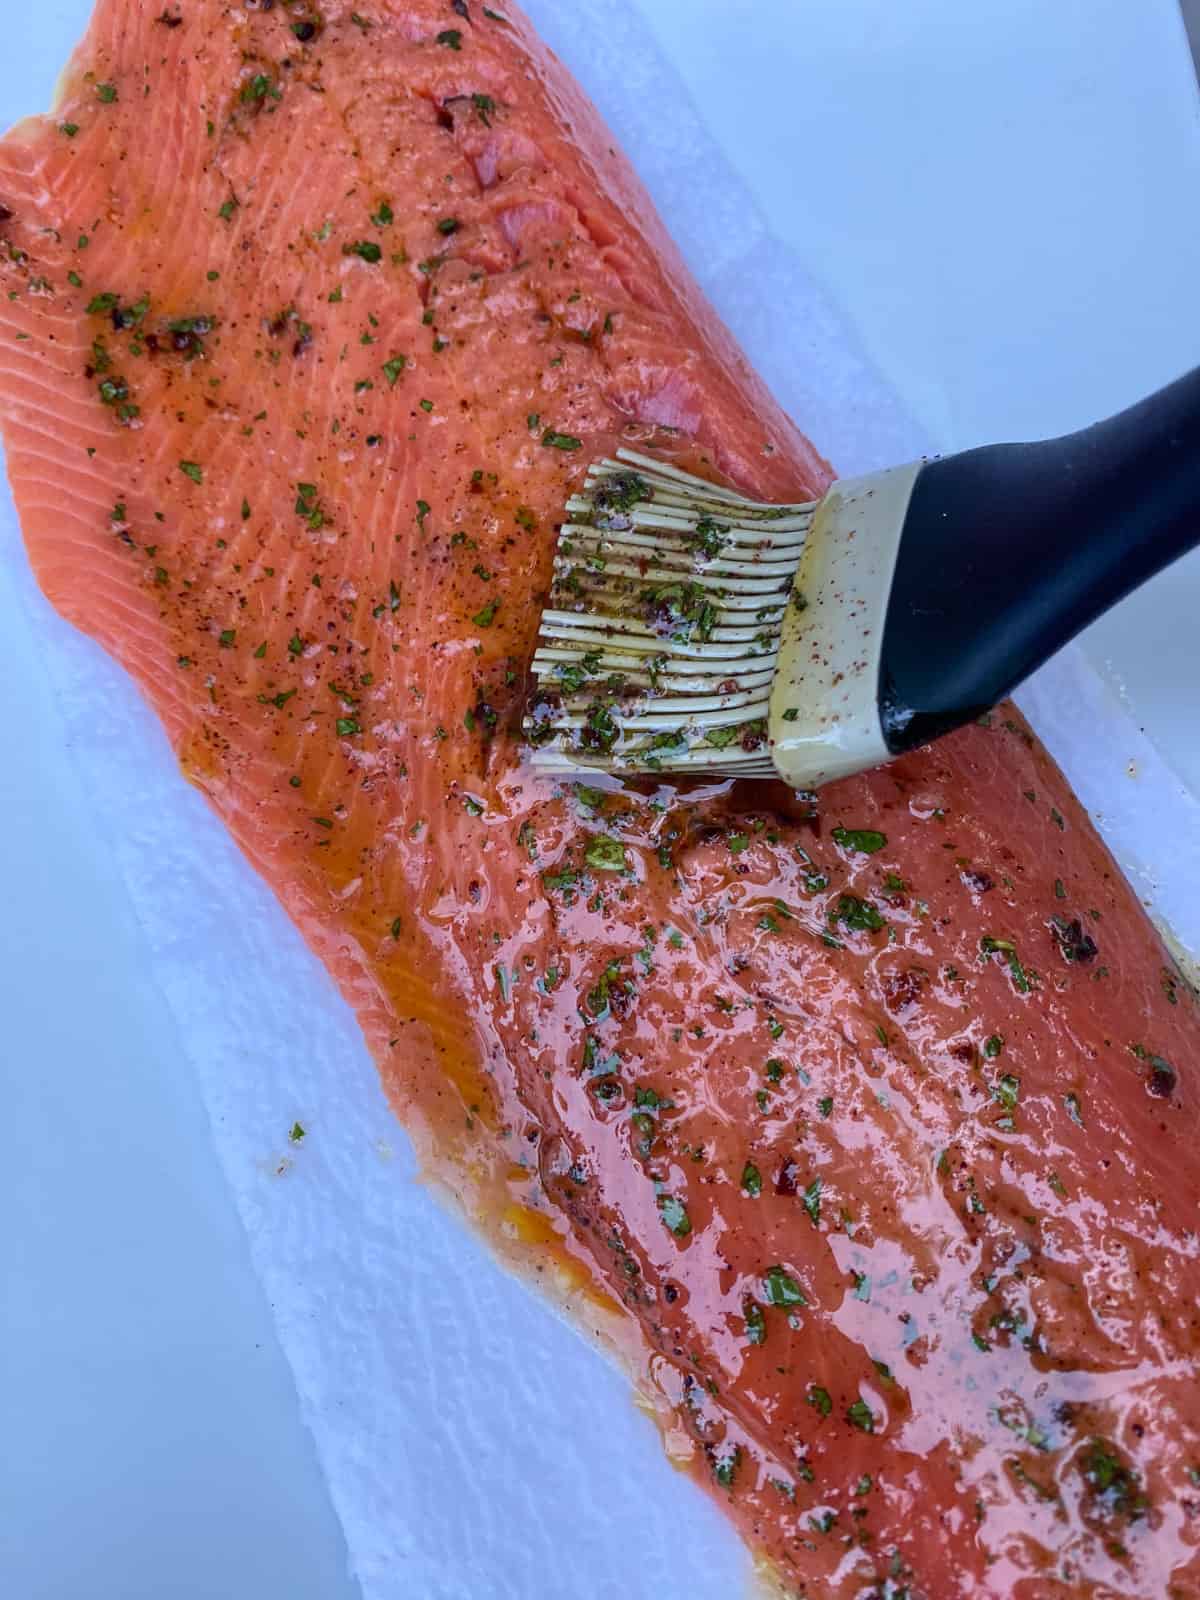 Brush the Mediterranean salmon marinade onto the salmon filet.